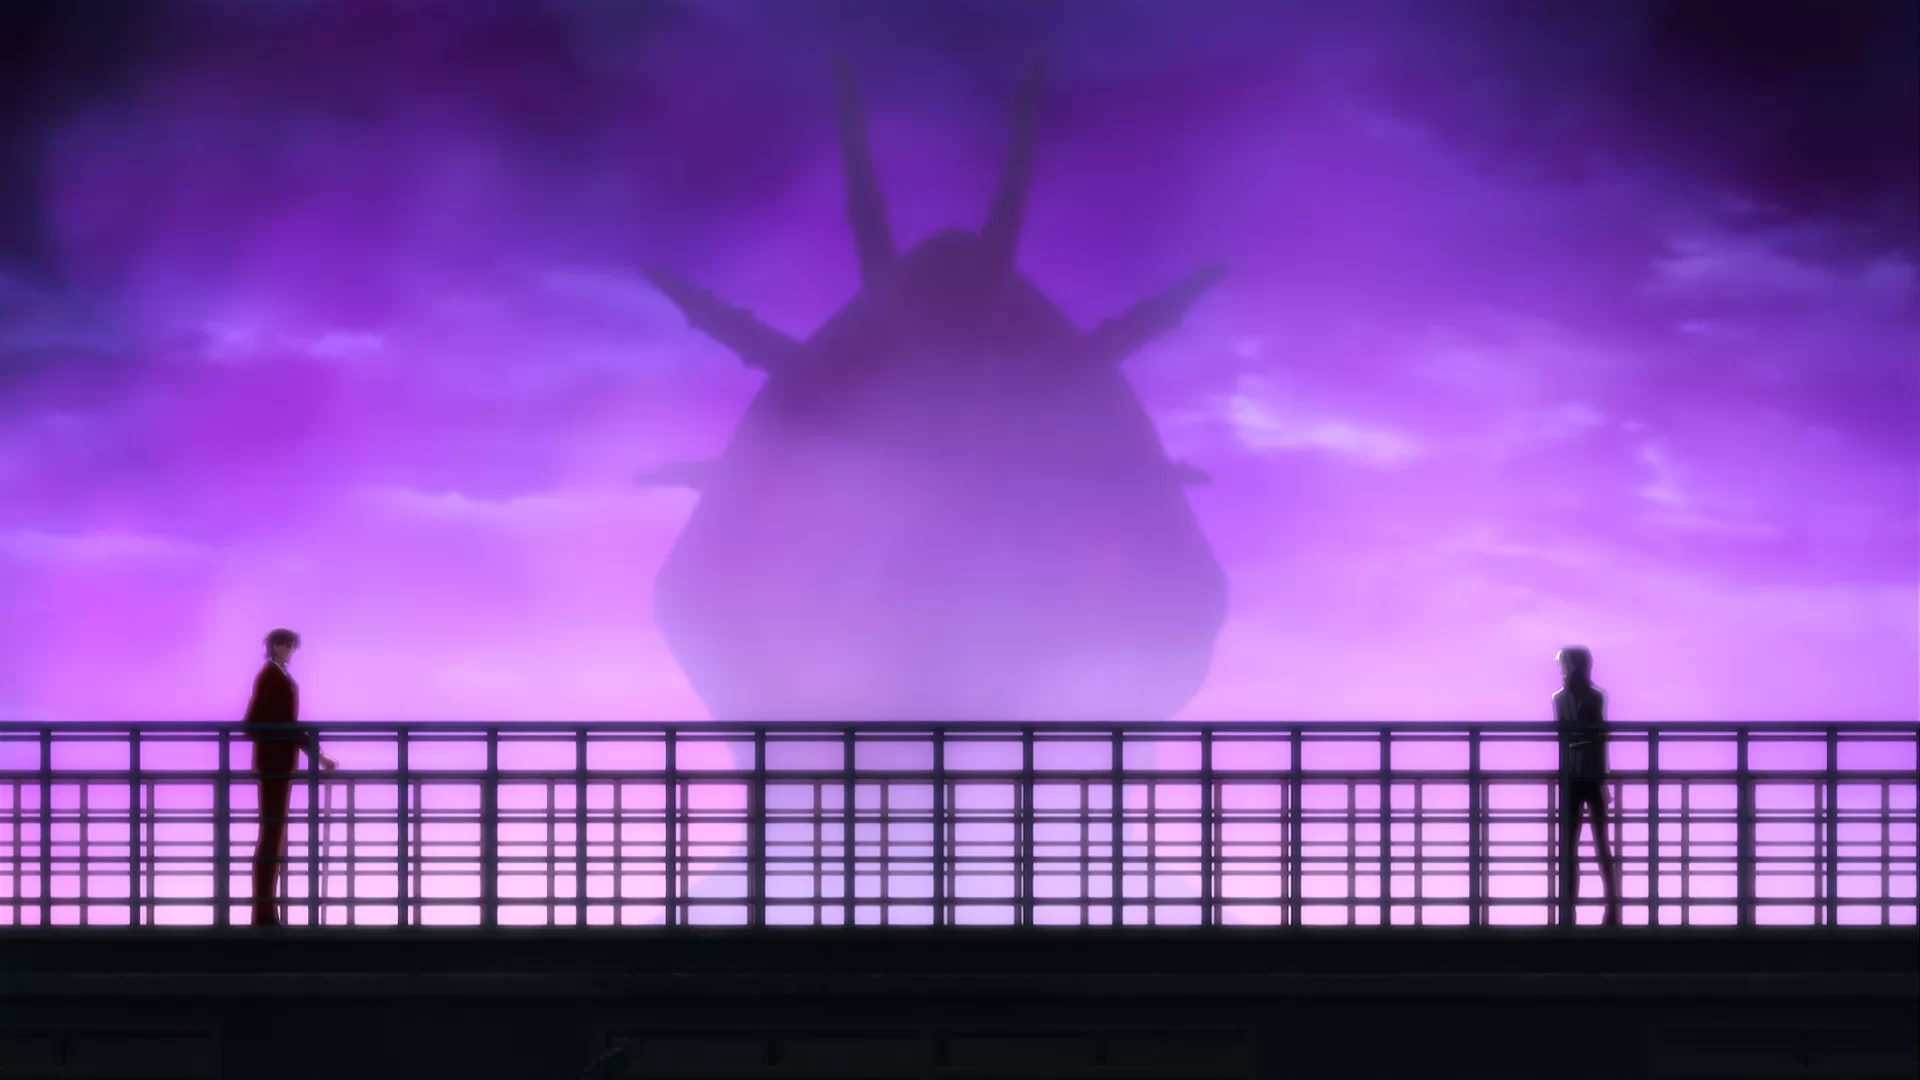 Minaturka 14 odcinka Fate/Zero